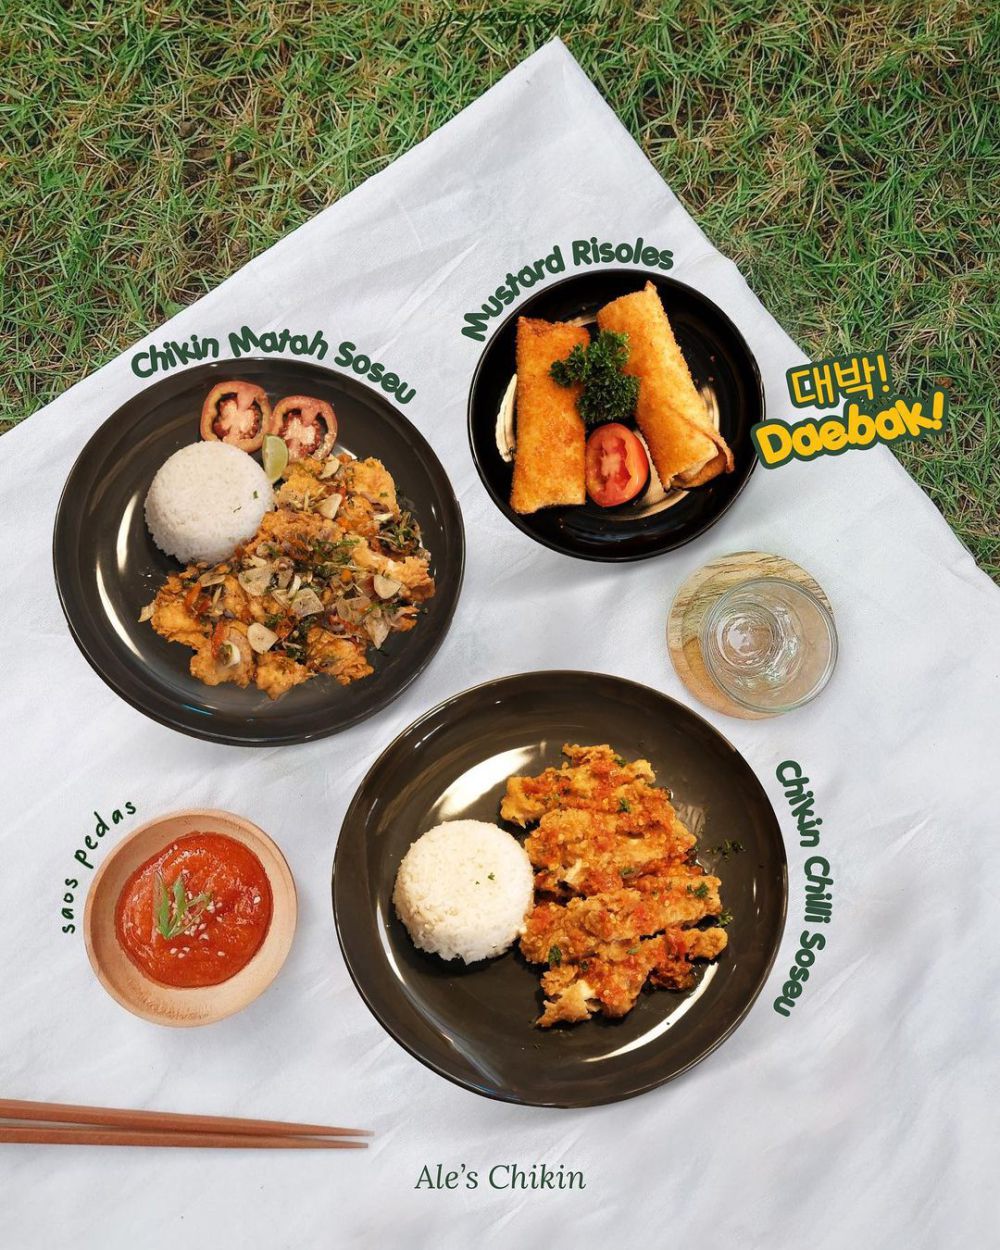 5 Tempat Makan Bebas Refill Nasi di Surabaya, Bukber Yuk!